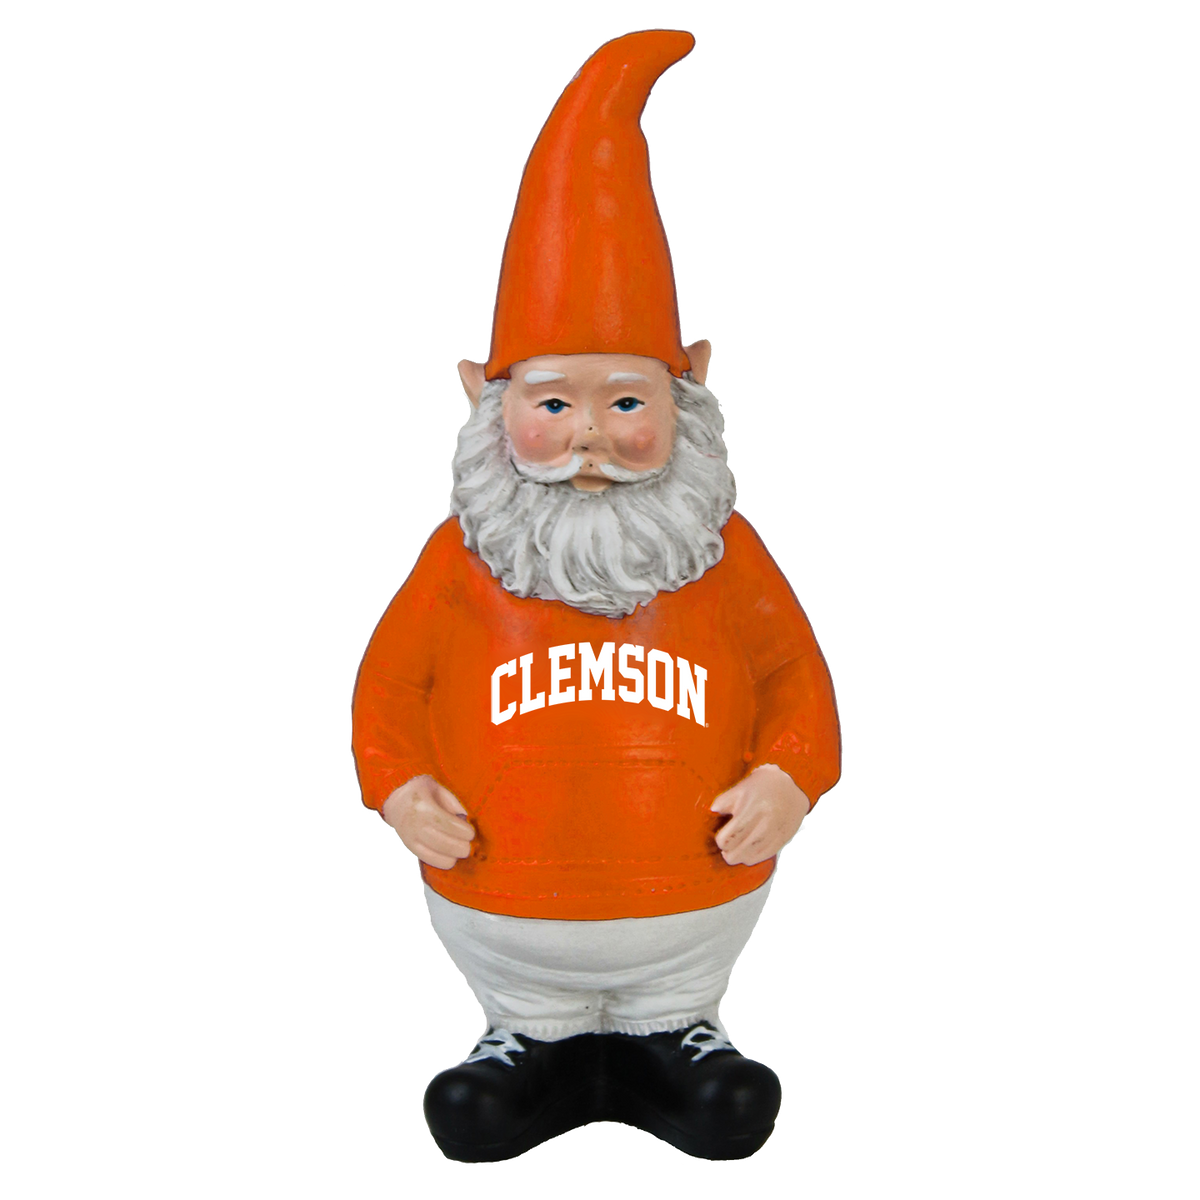 Clemson Gnome Ornament